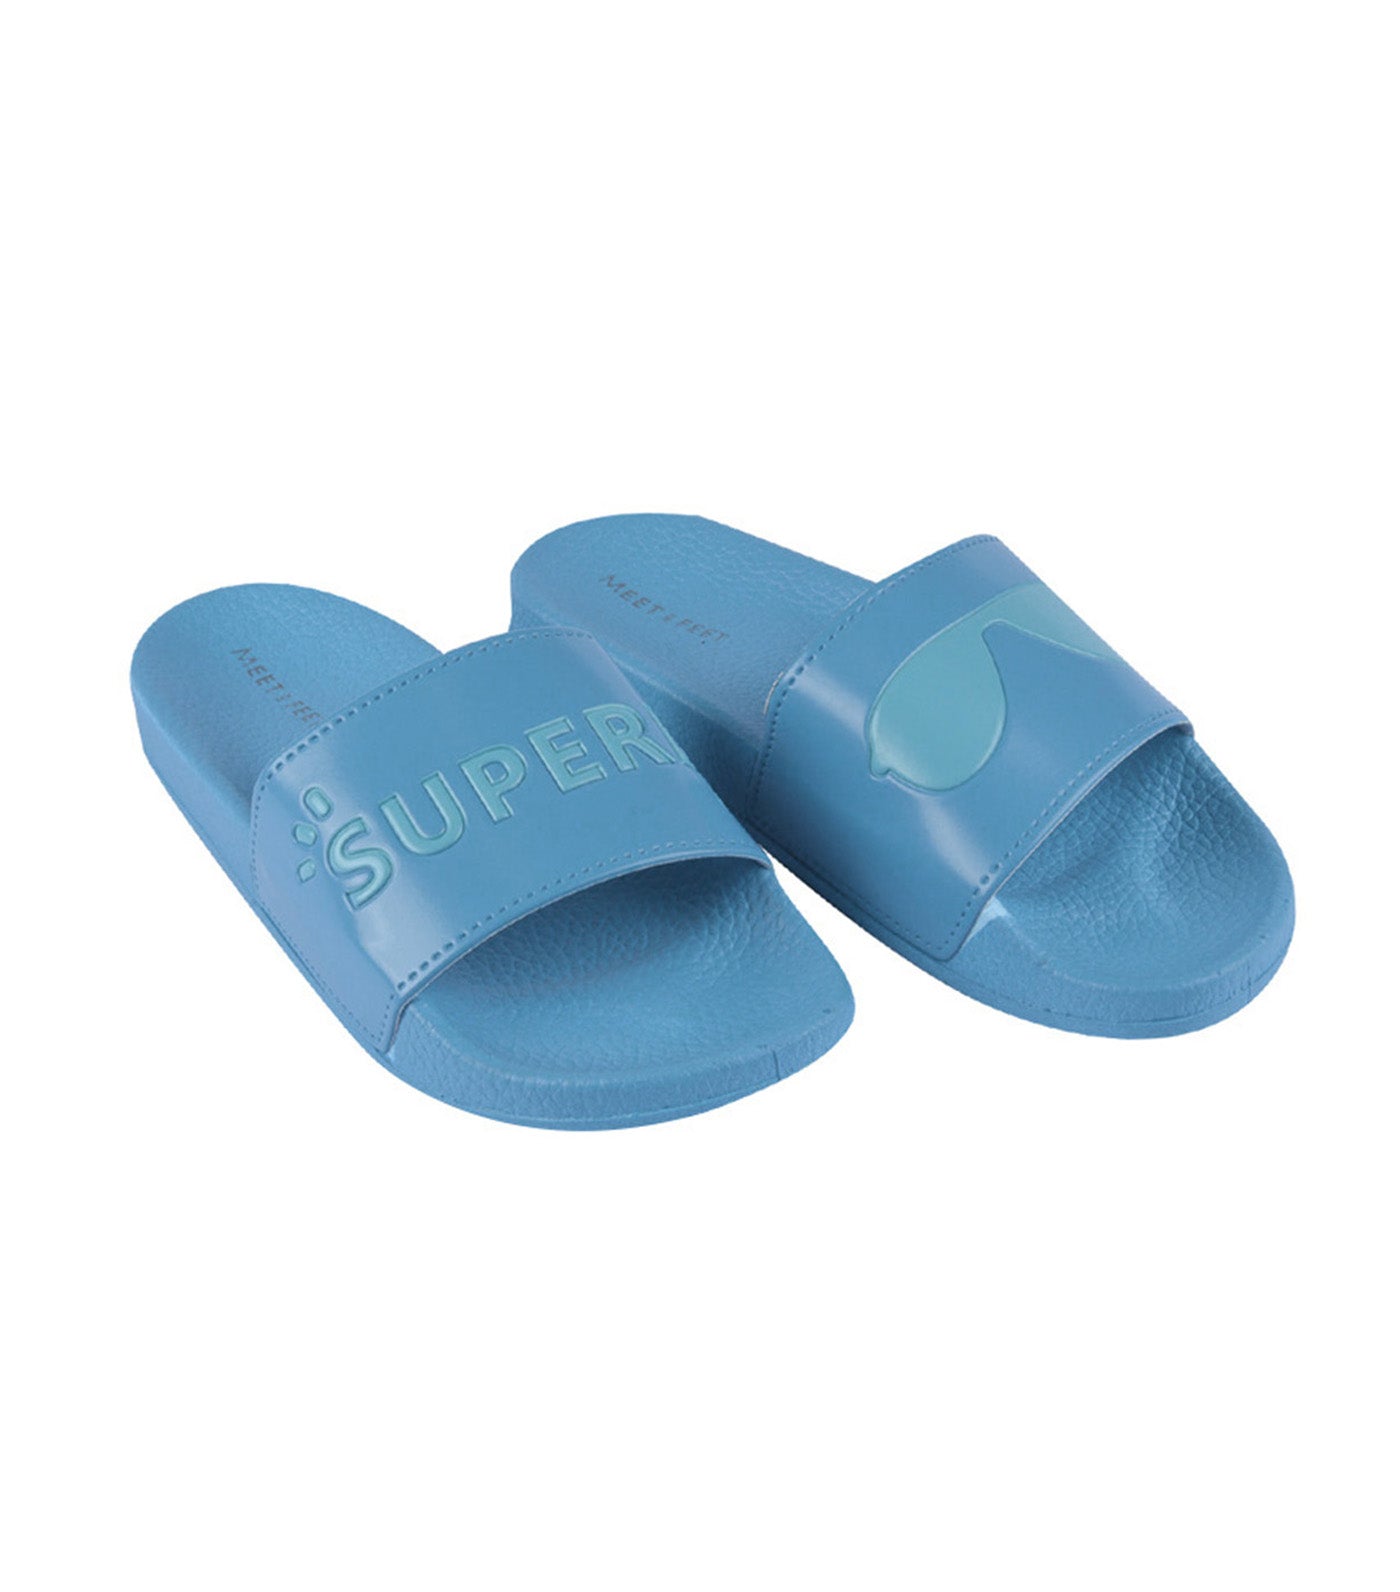 meet my feet white superb slippers